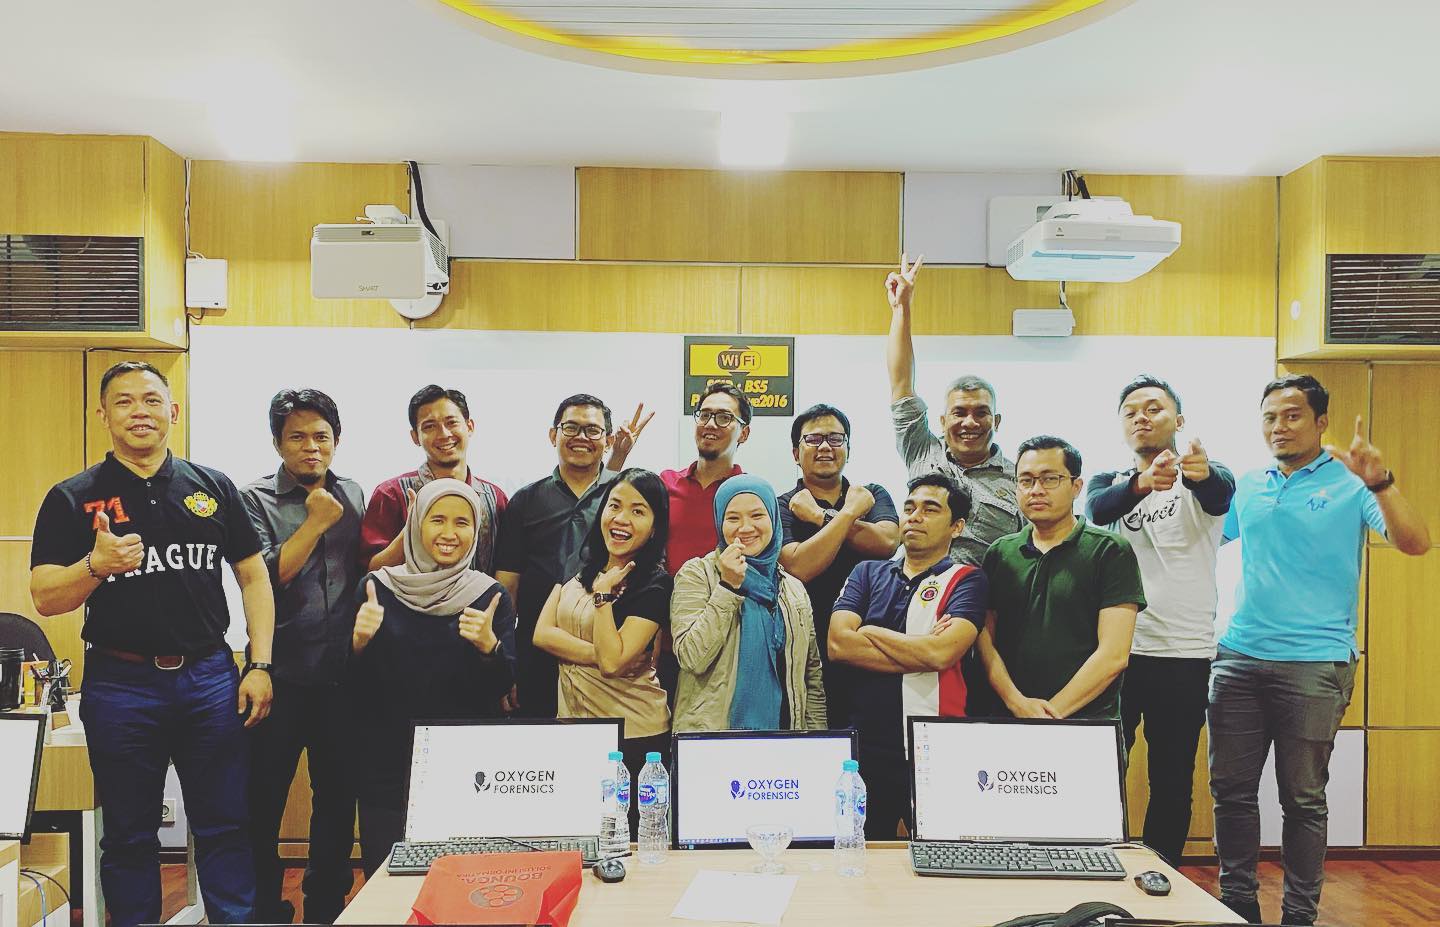 Pelatihan Oxygen Mobile Forensic dengan peserta dari Badan Pemeriksa Keuangan (BPK) dan Suruhan Jaya Pemberantasan Rasuah Malaysia (SPRM)